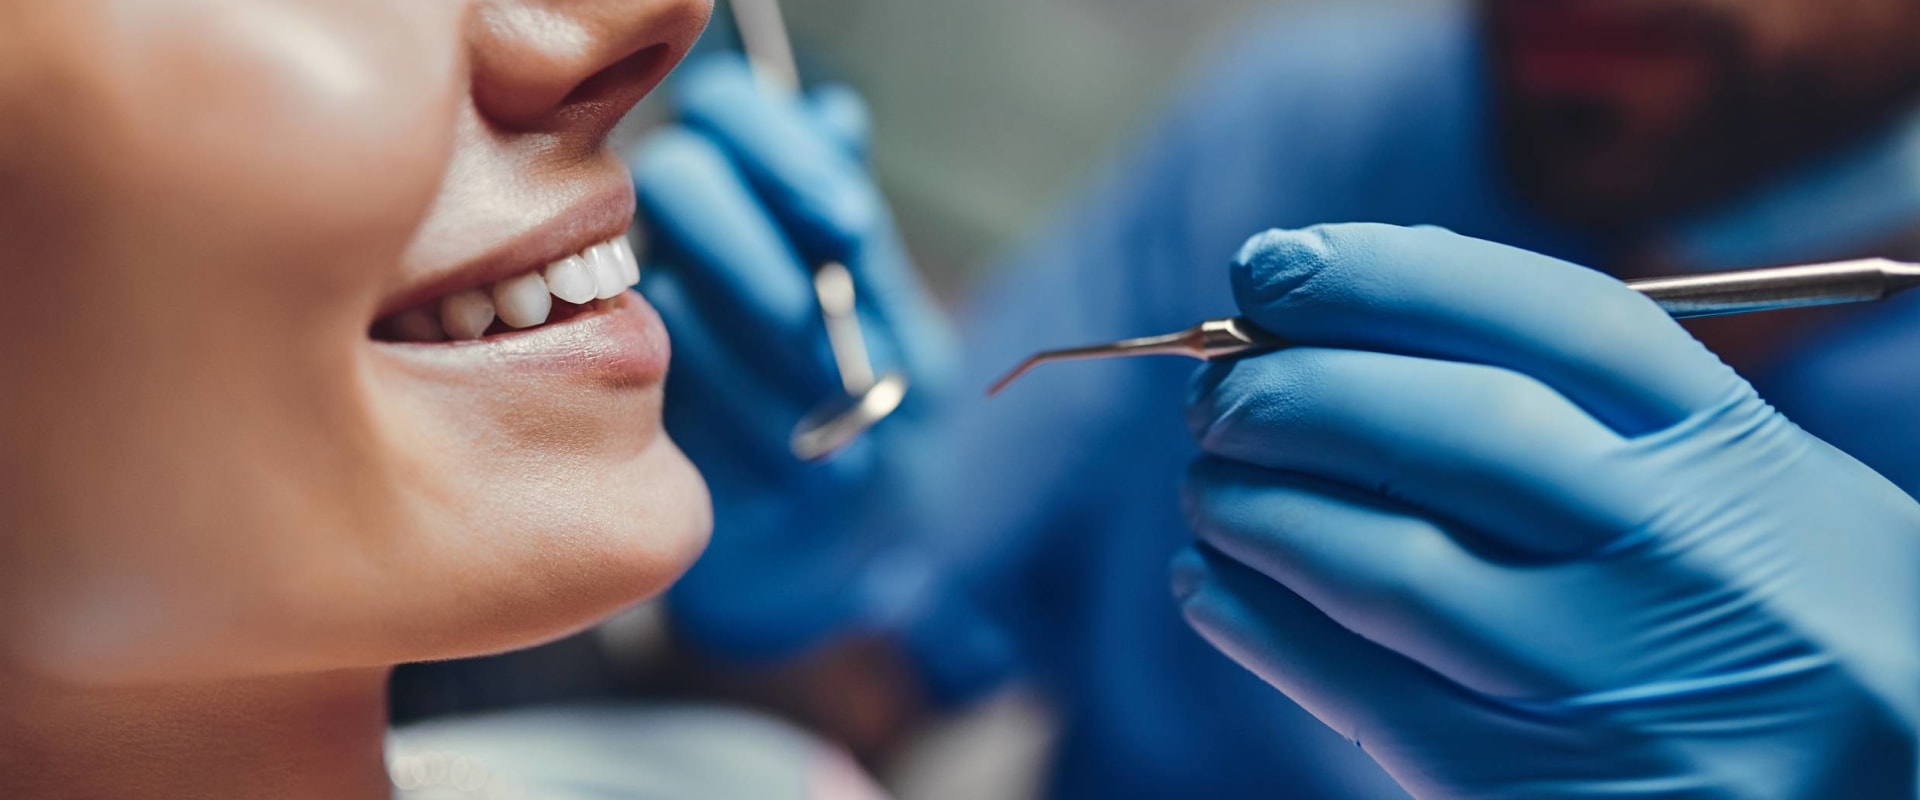 Factors to Consider When Choosing an Endodontist